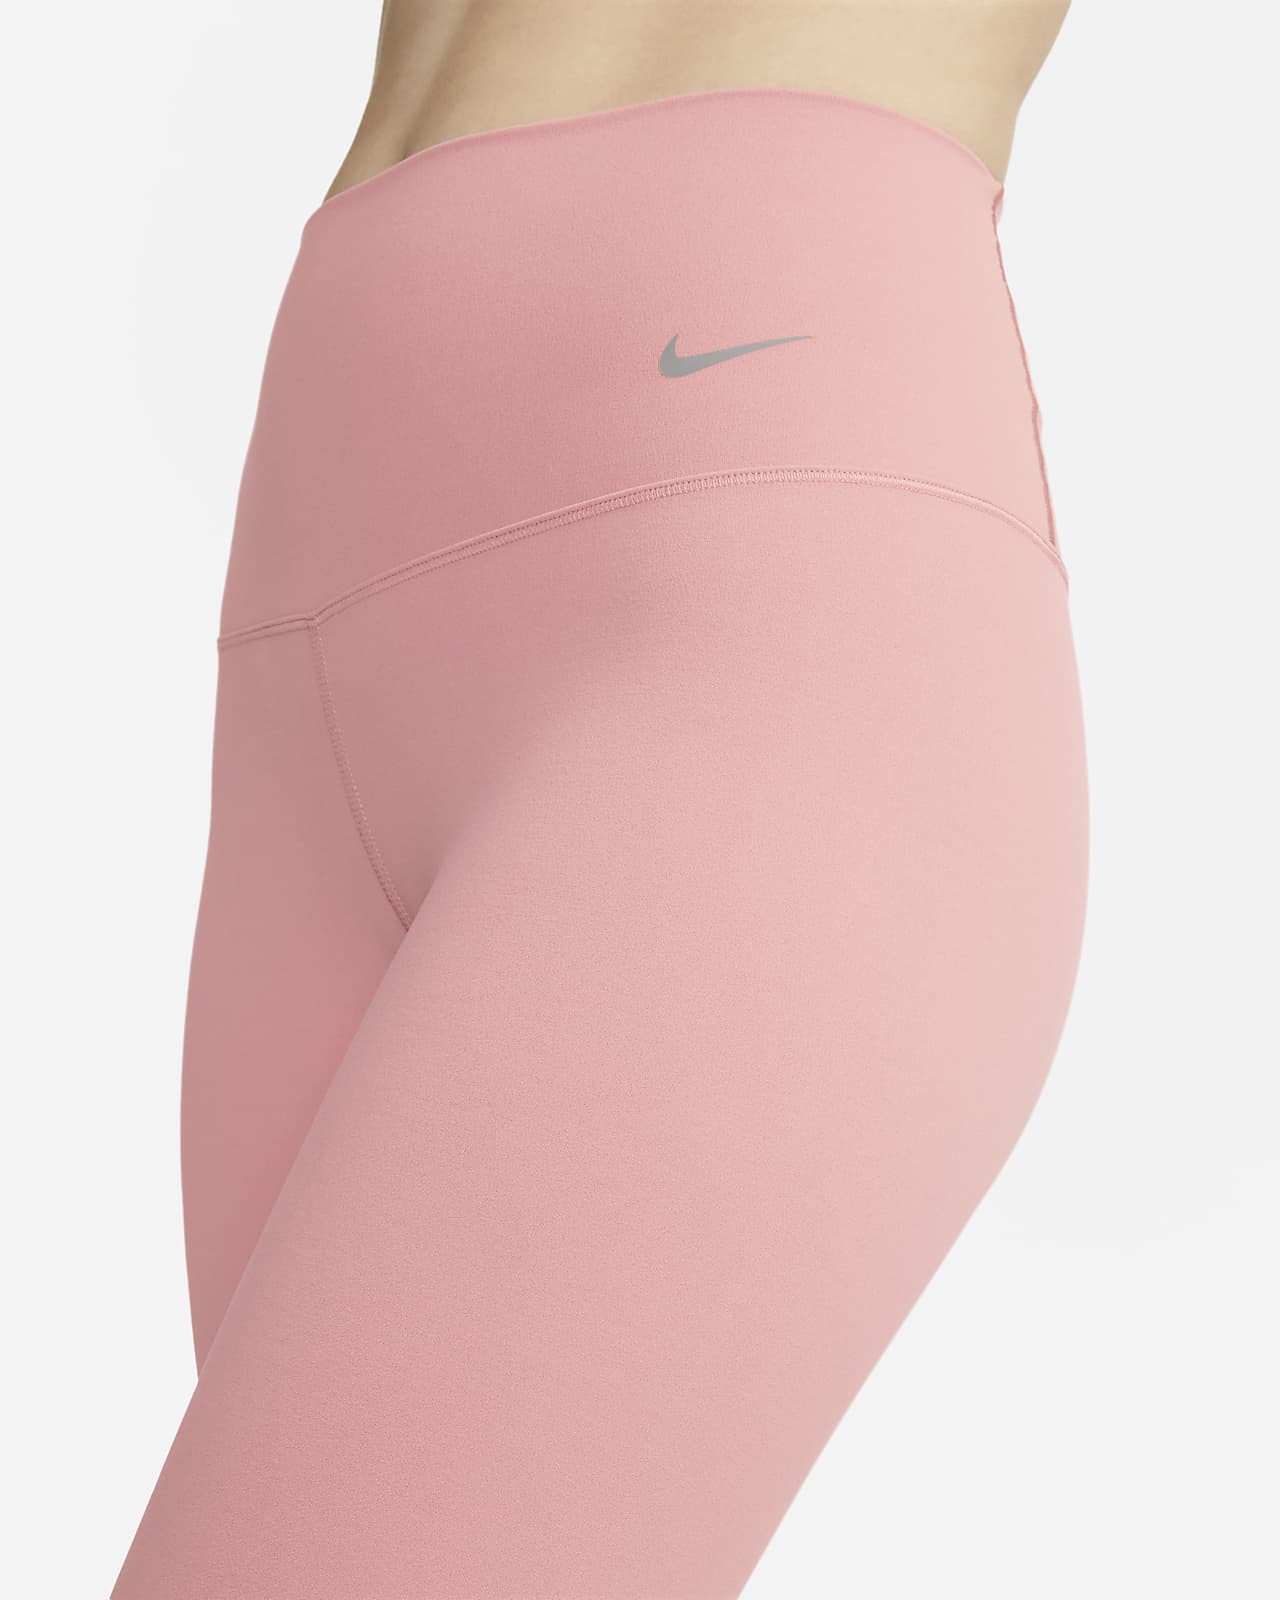  Mallas Nike Mujer